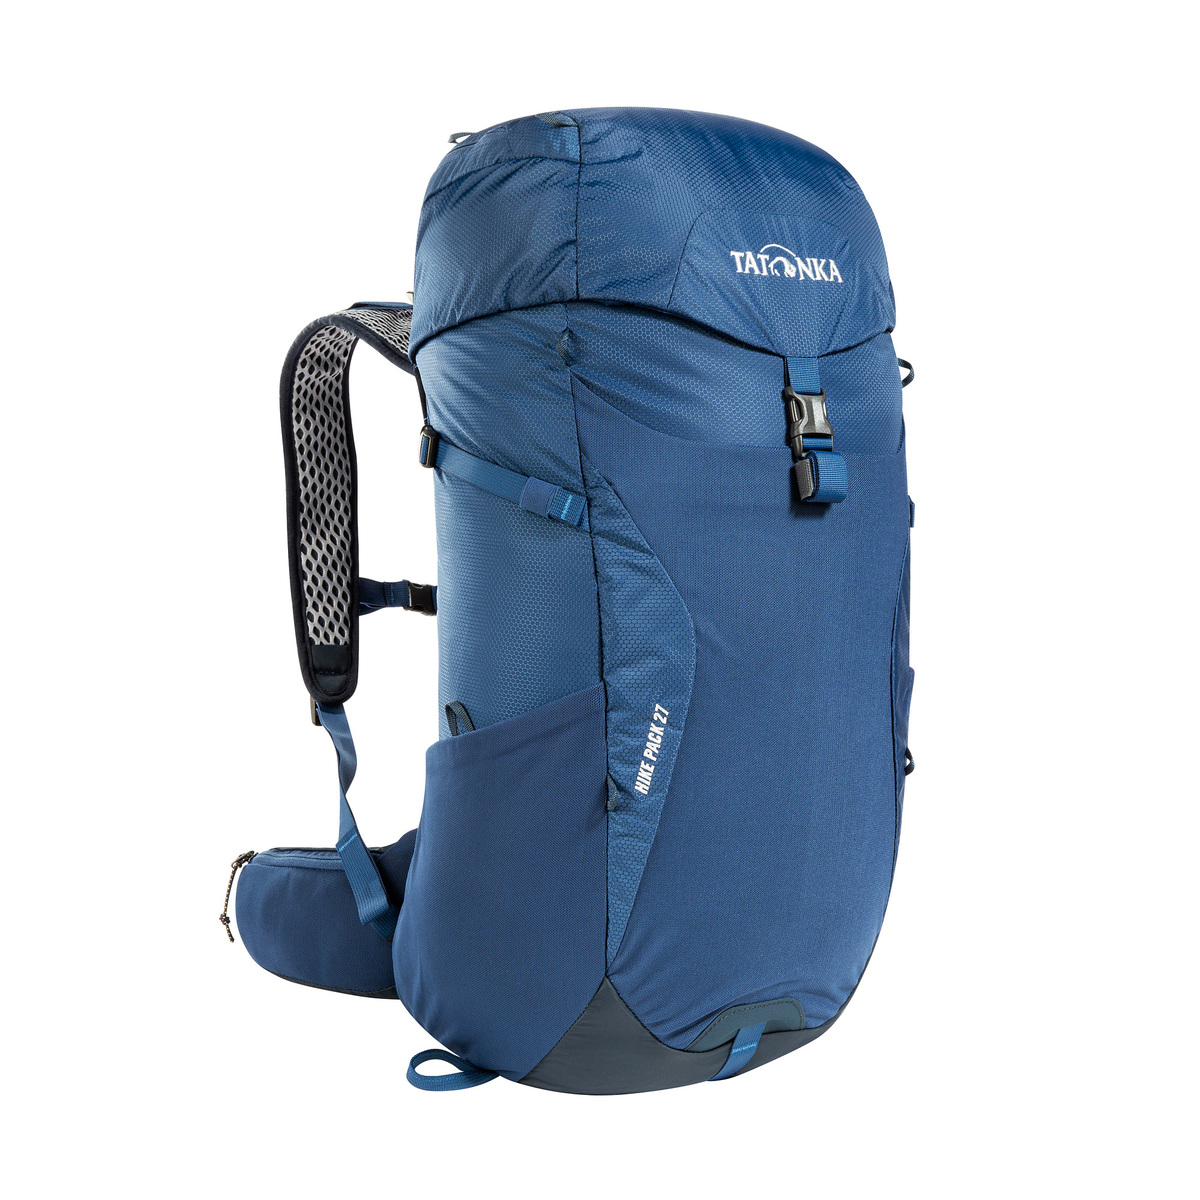 Tatonka "Hike Pack 27" - darker blue